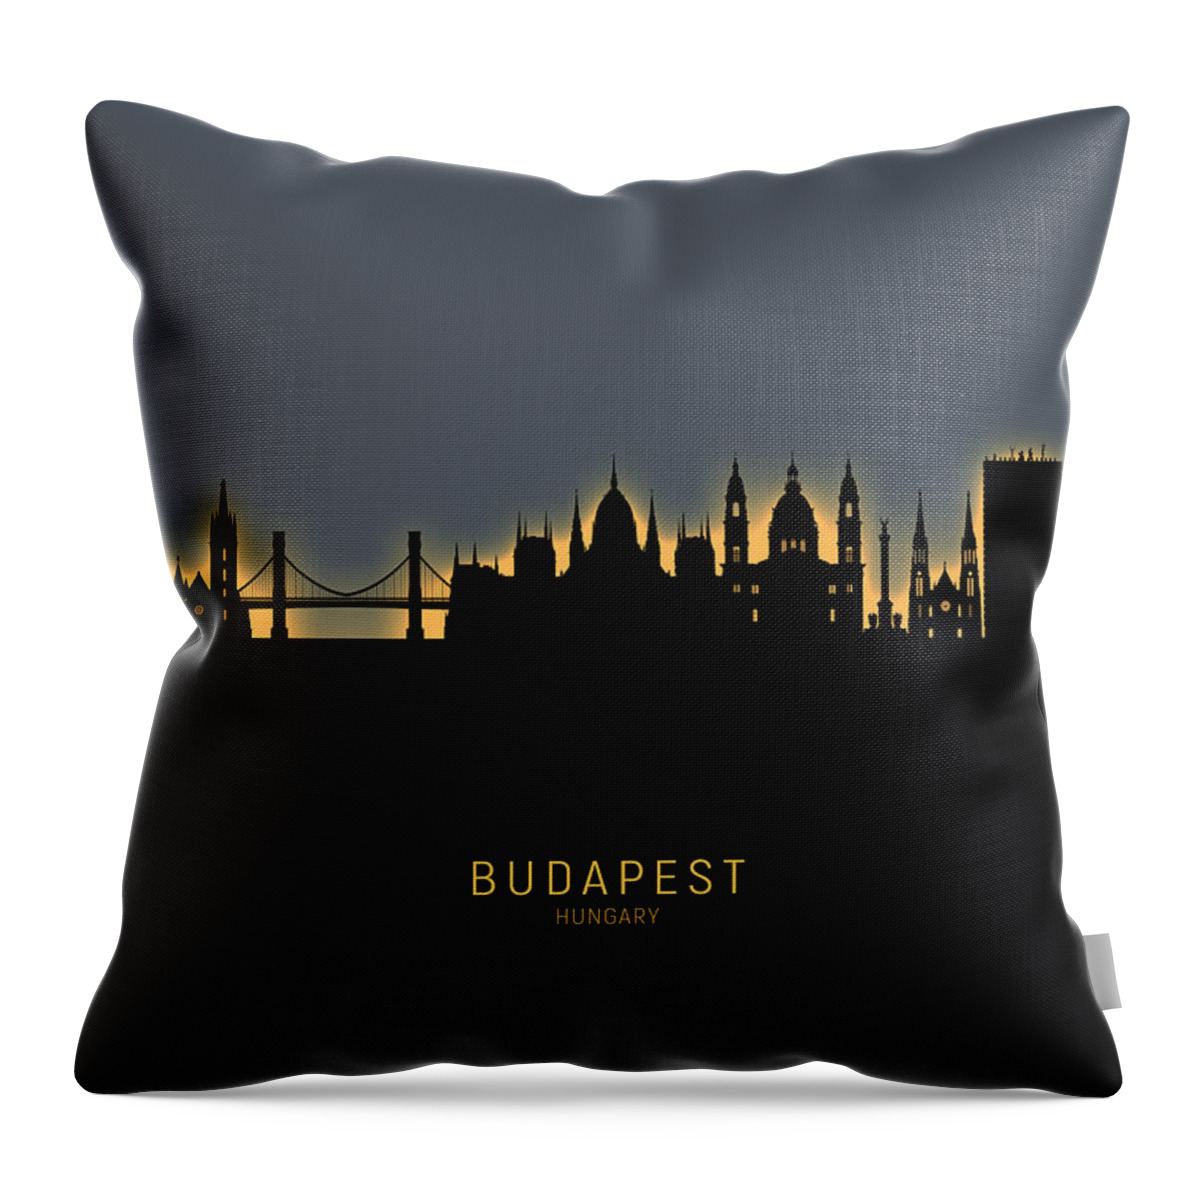 Budapest Throw Pillow featuring the digital art Budapest Hungary Skyline #16 by Michael Tompsett